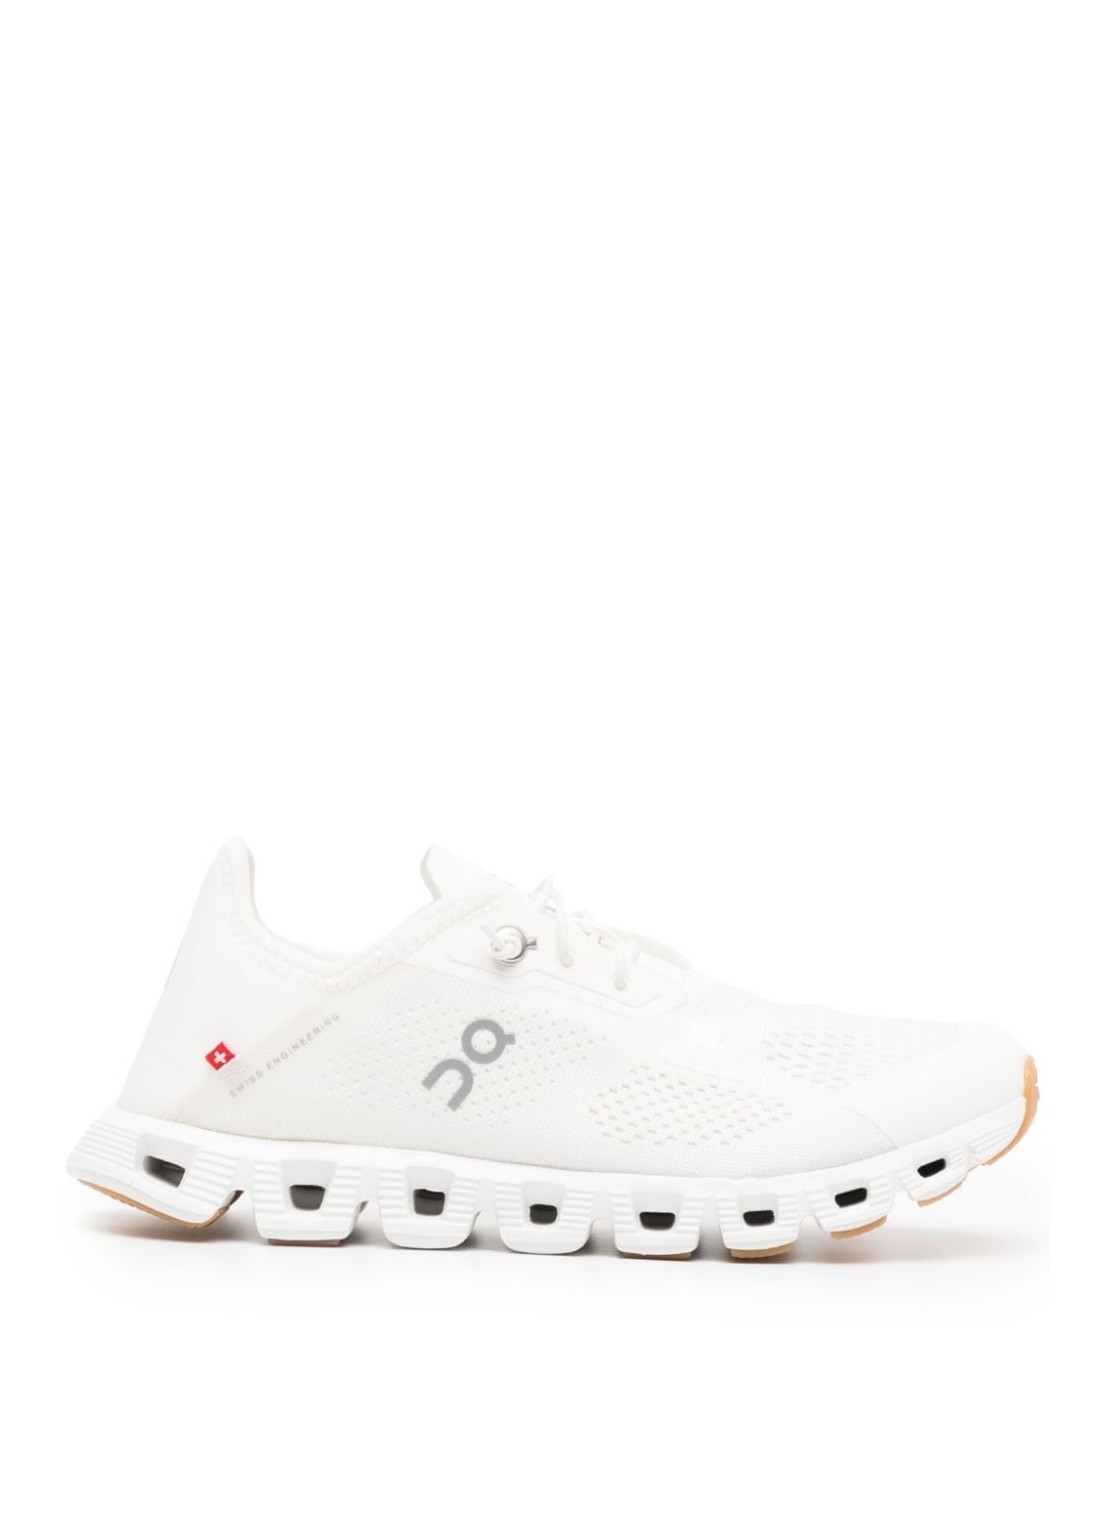 Sneaker on running sneaker woman cloud 5 coast 3wd10541743 undyed white white talla blanco
 